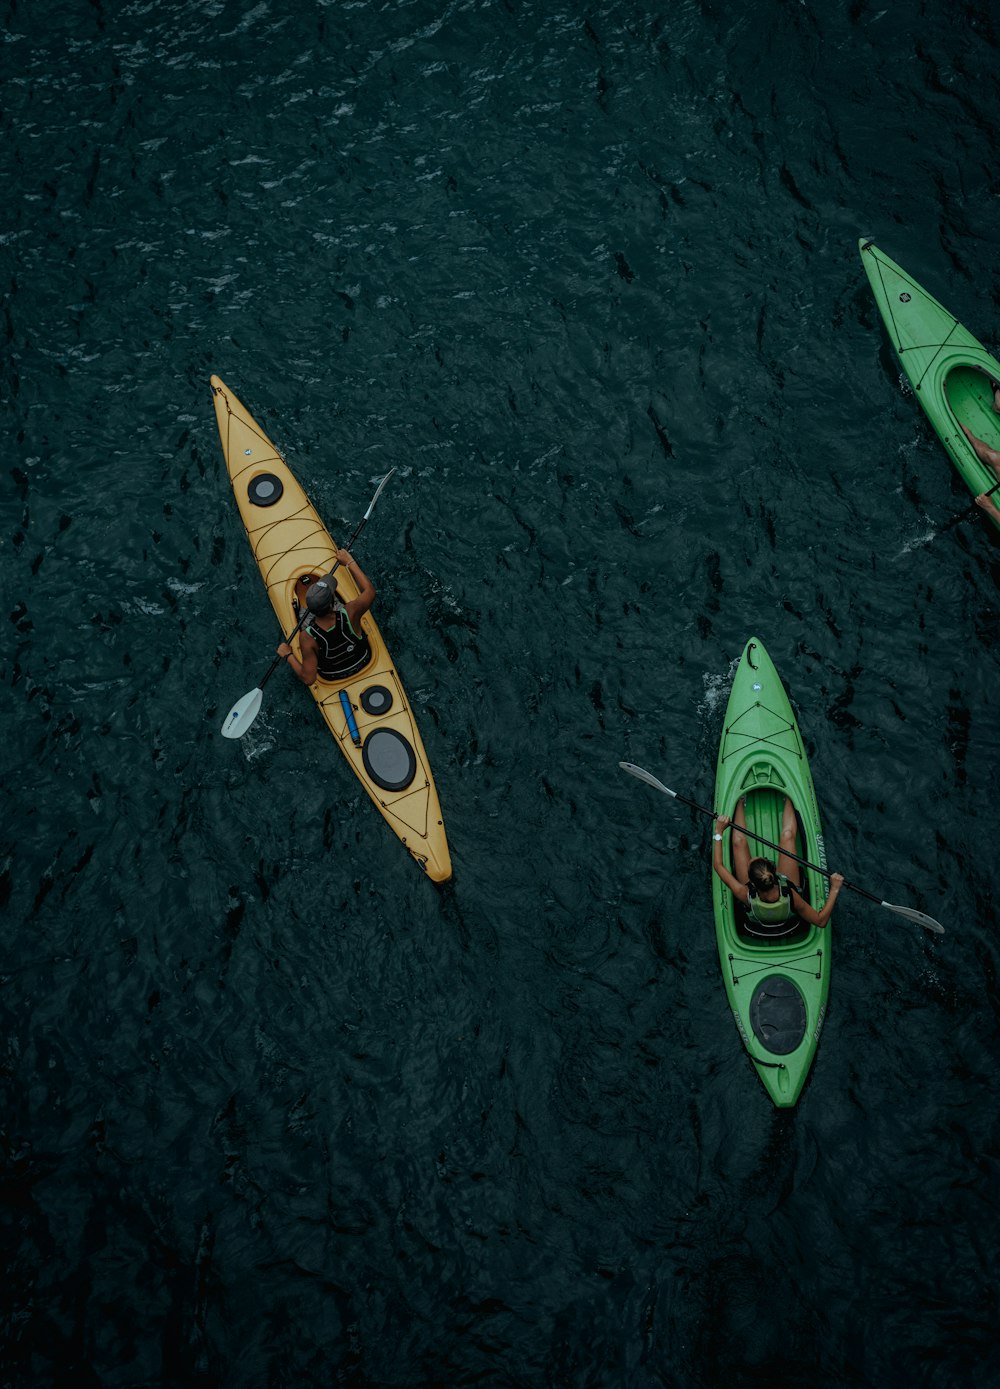 Best 500+ Kayak Pictures | Download Free Images on Unsplash